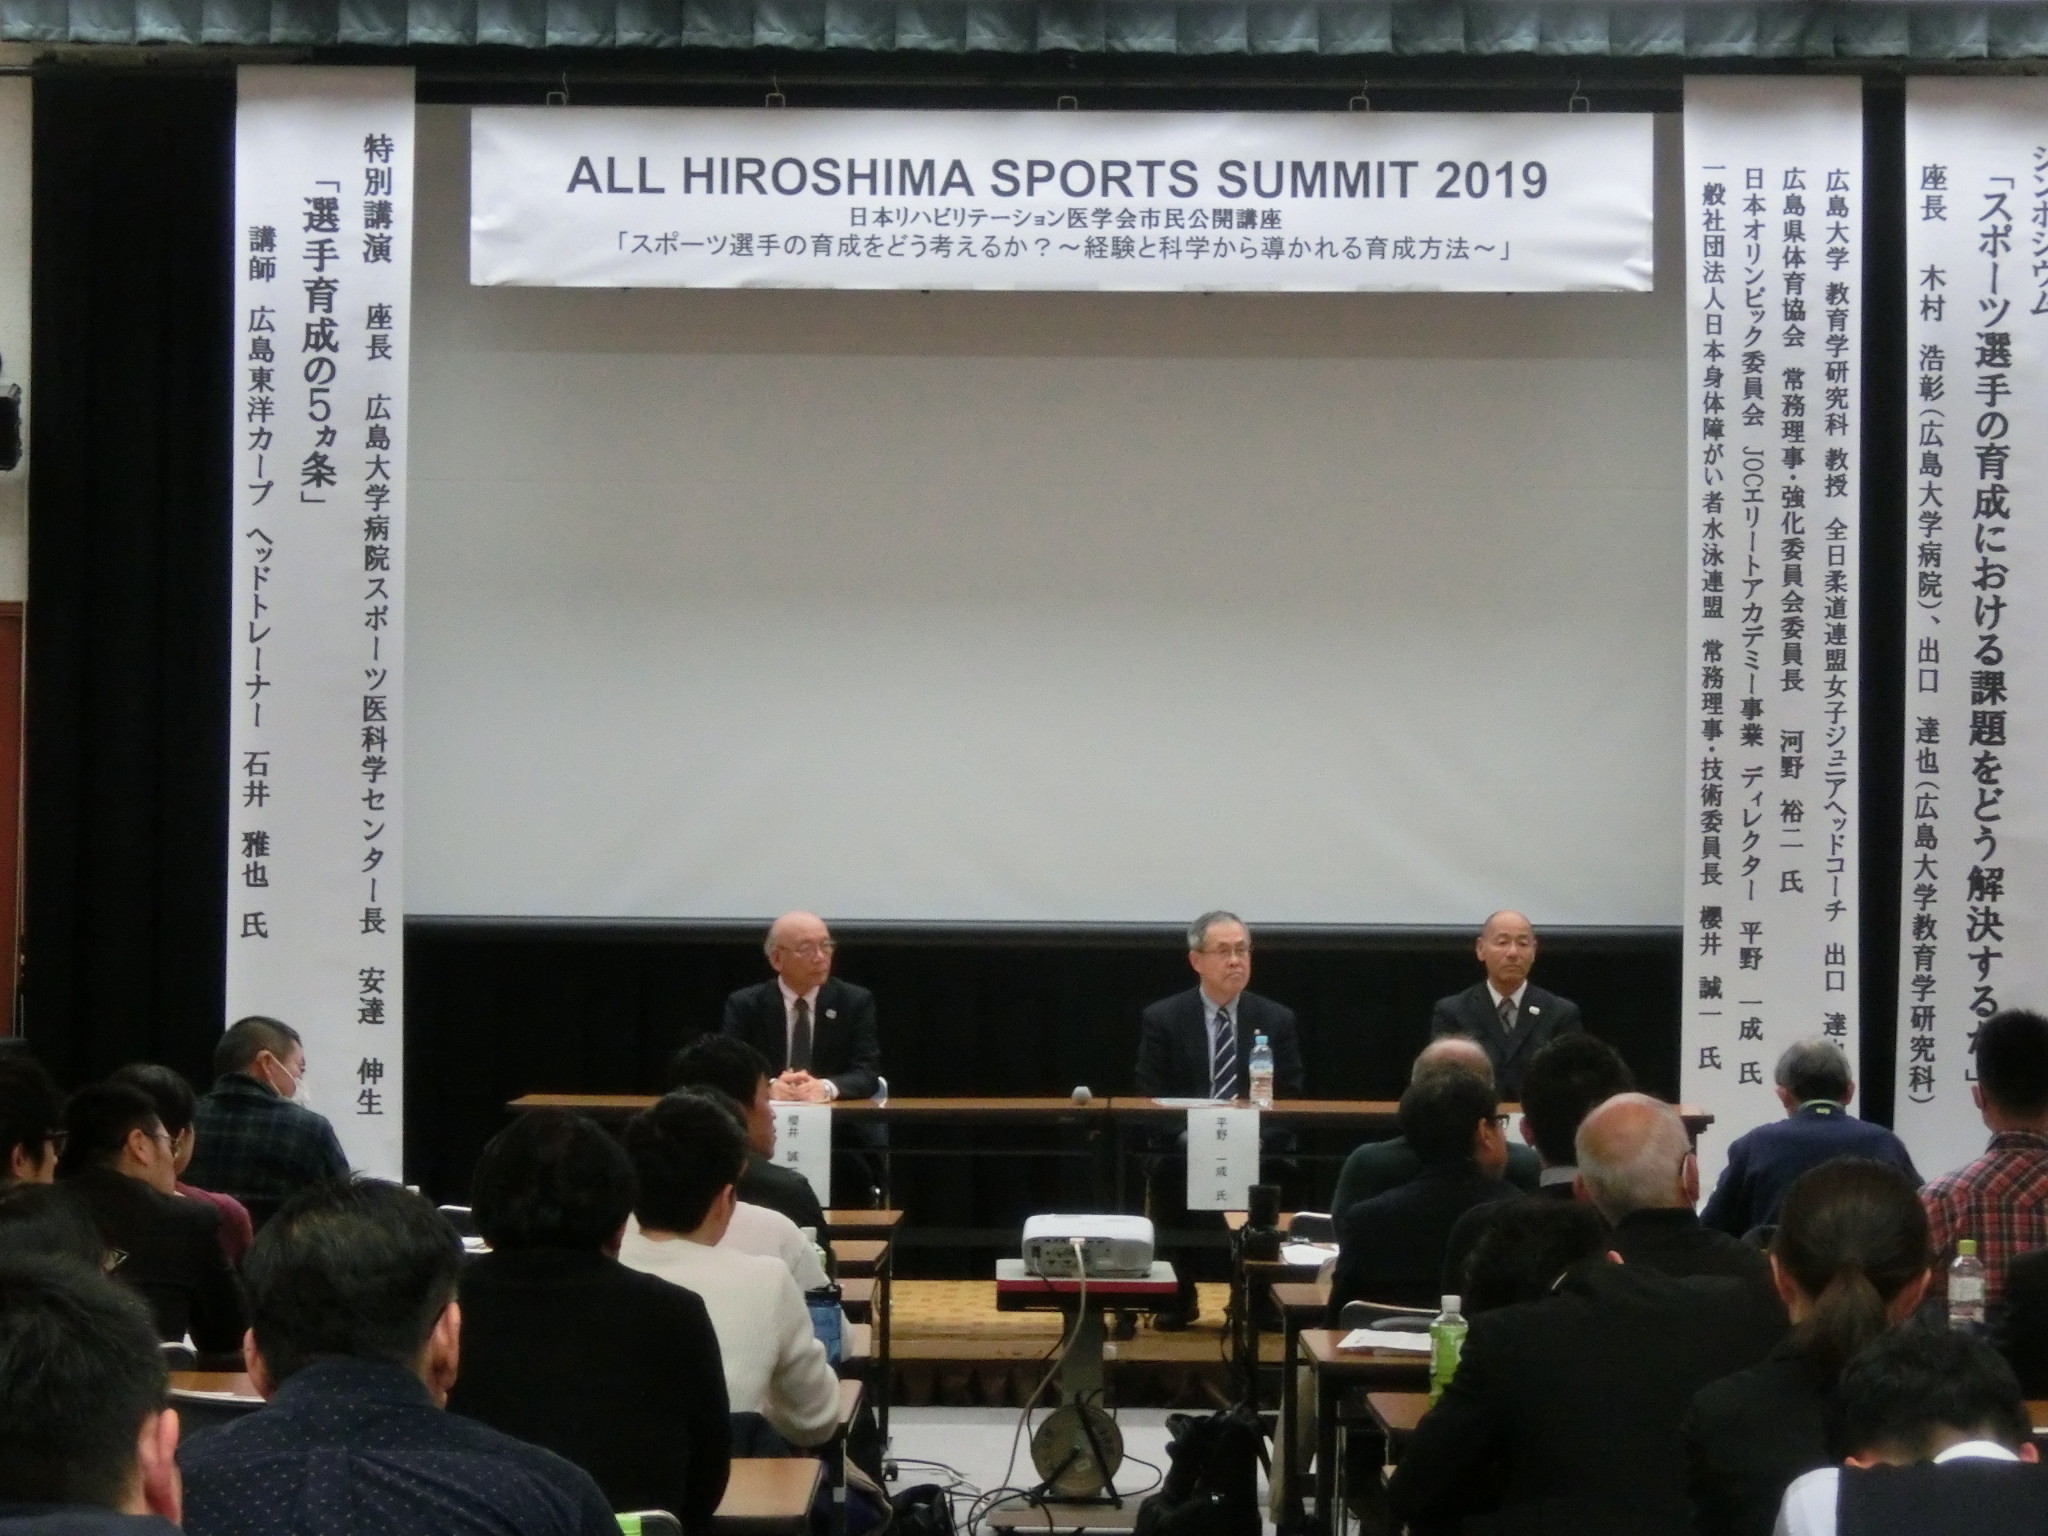 ALL HIROSHIMA SPORTS SUMMIT 2019を開催しました